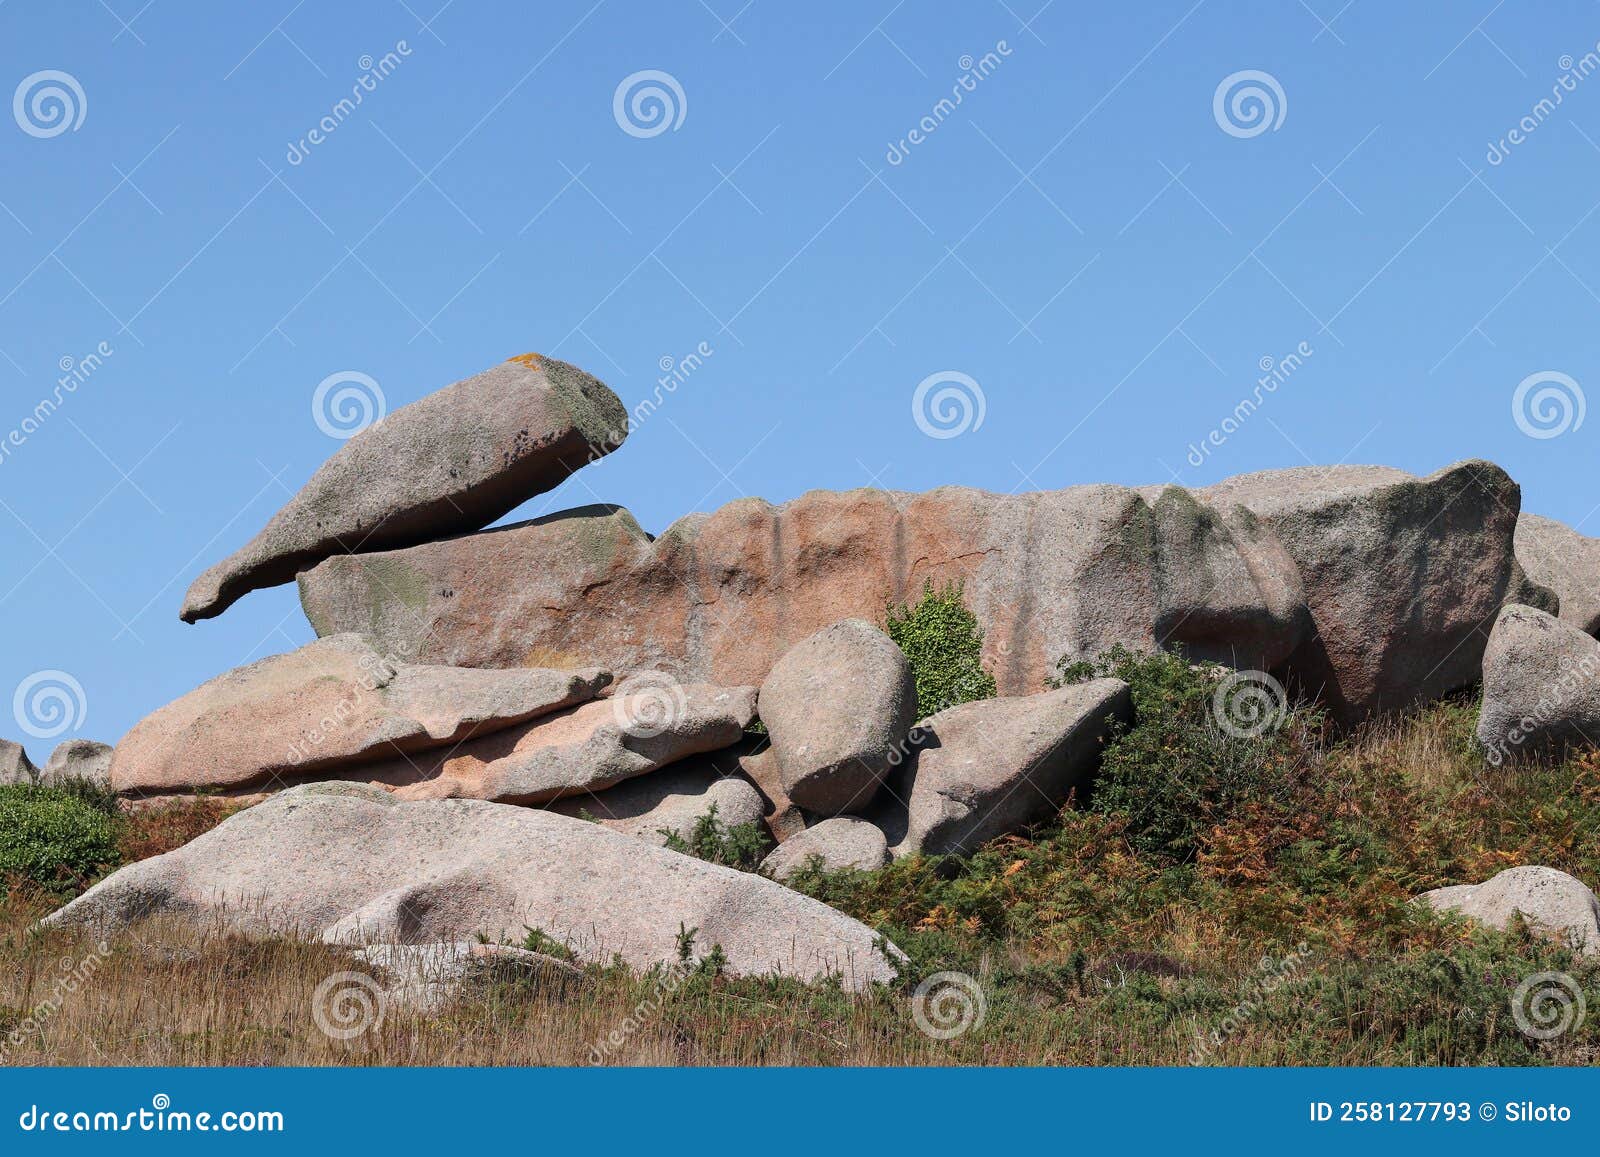 boulders on the cote de granit rose in brittany, france